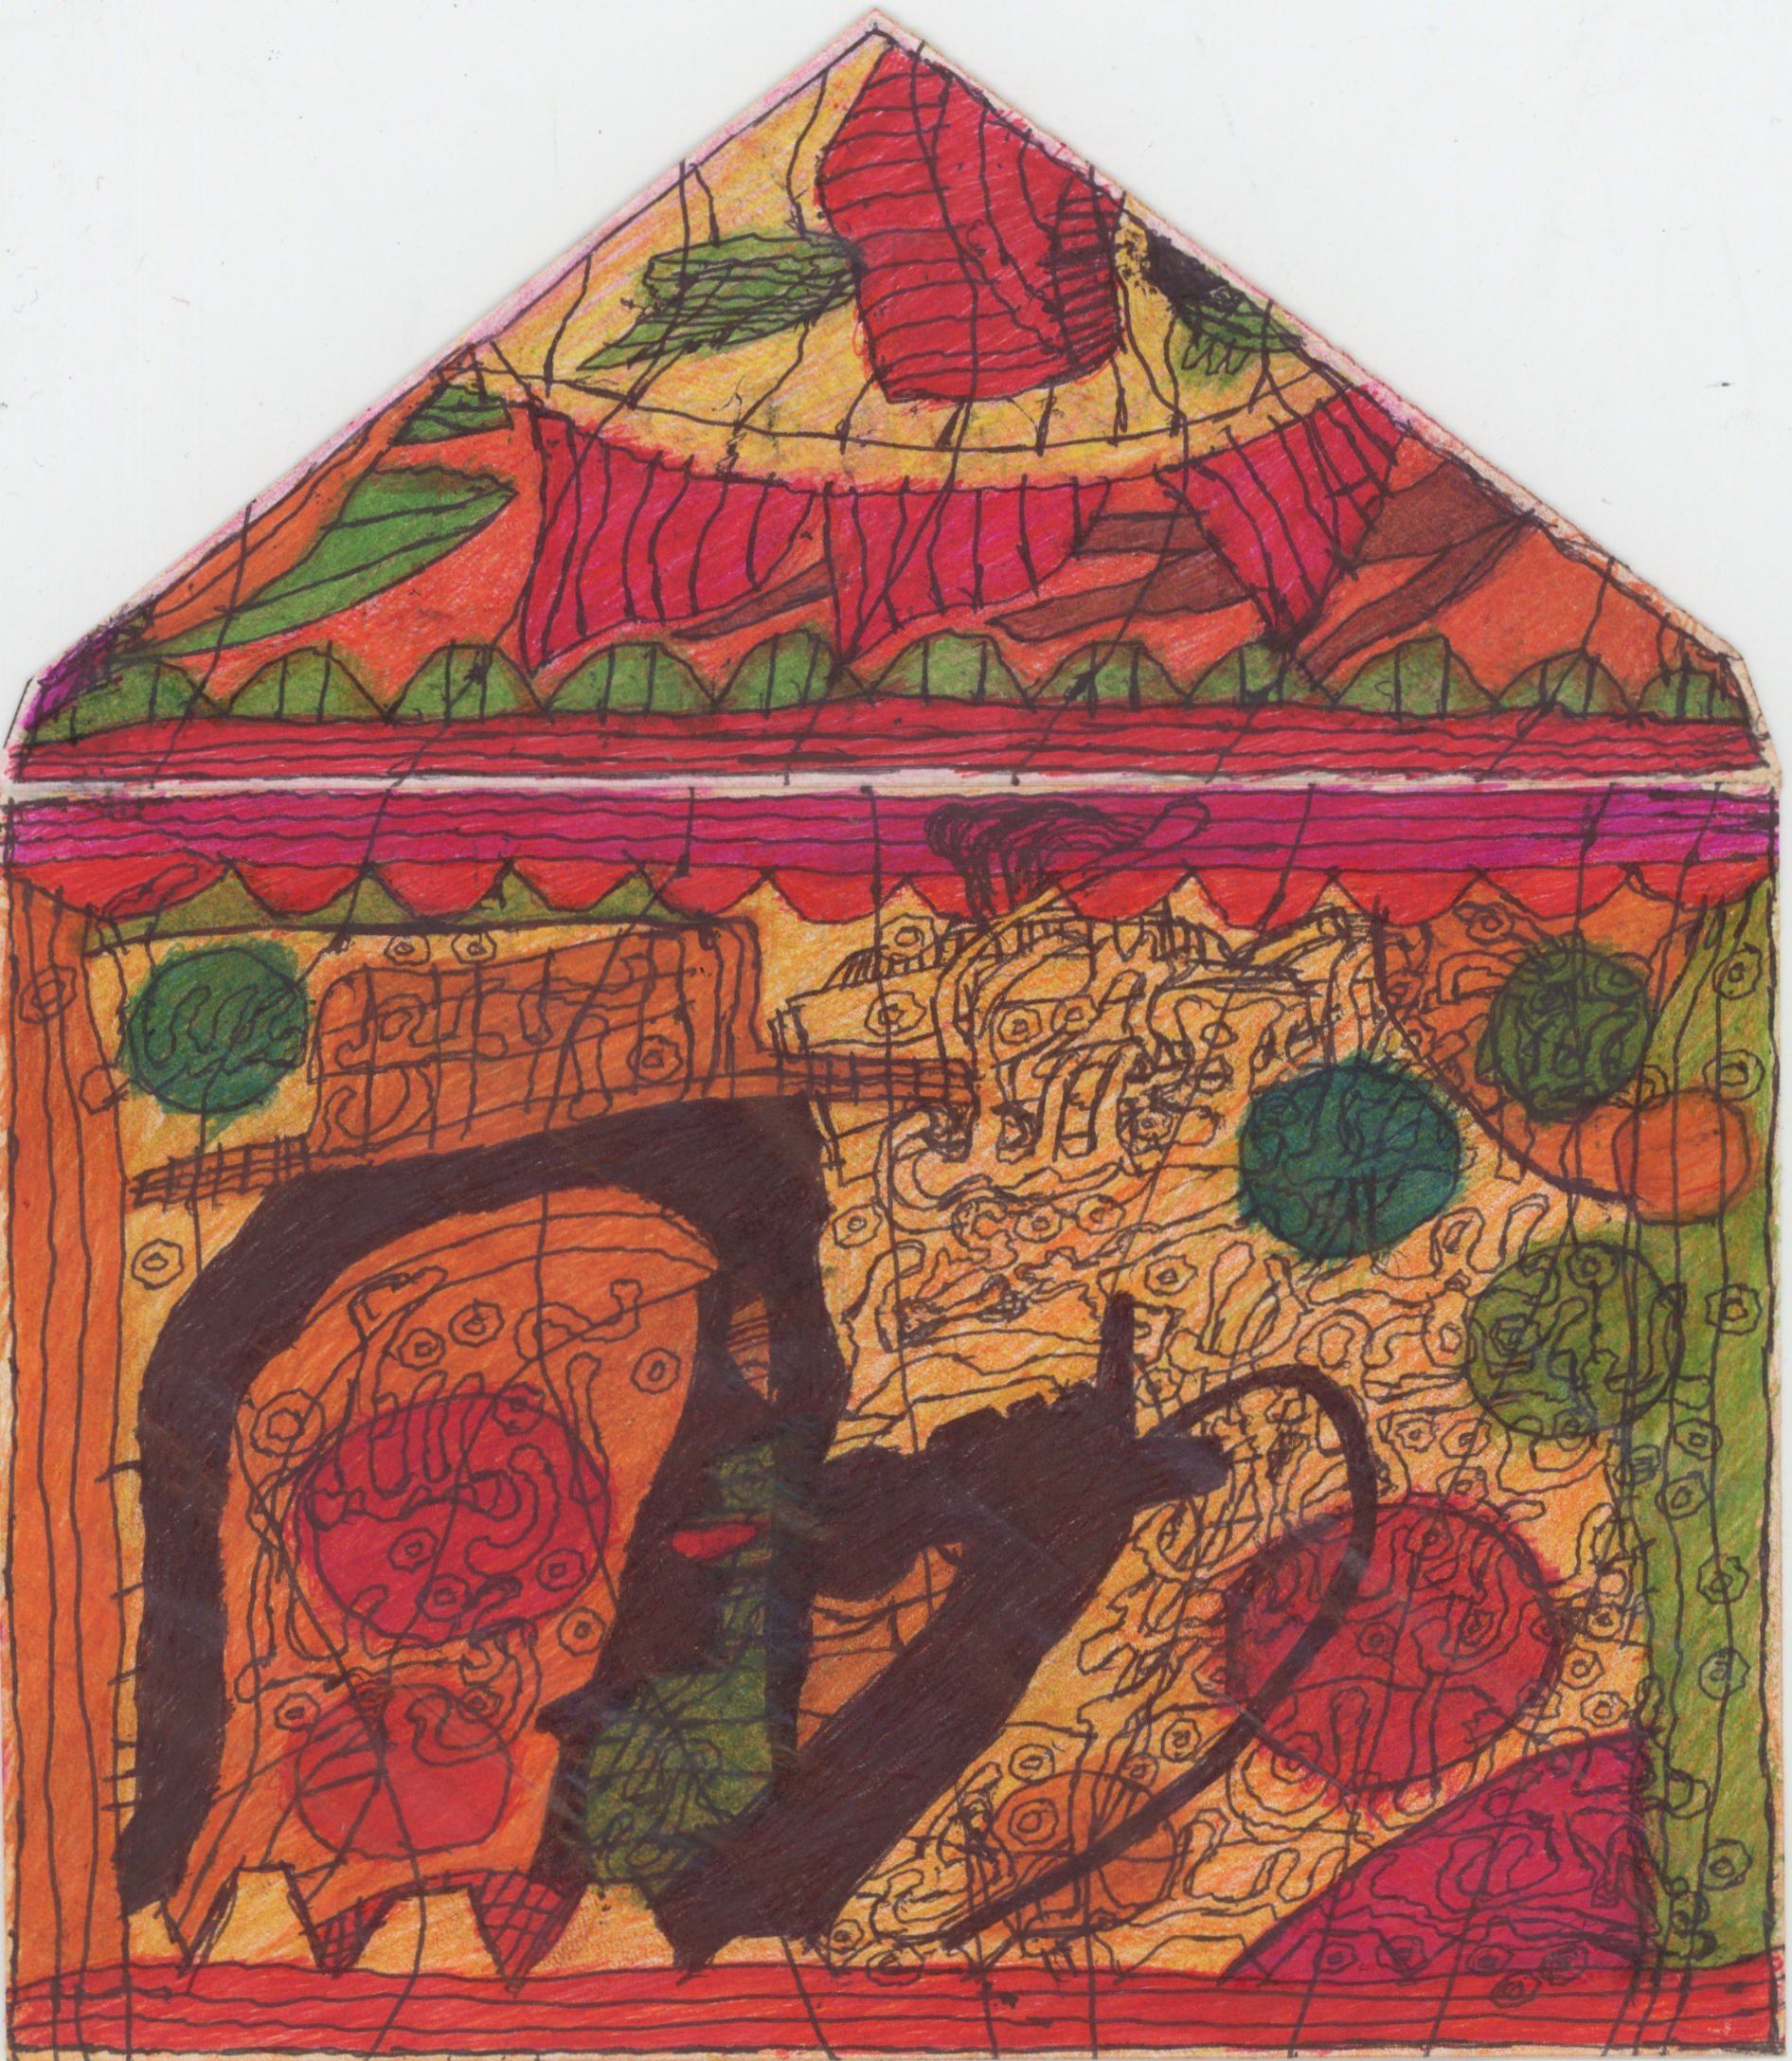   Kiyavash Danesh  Untitled  , n.d. Ink, marker on envelope 4.5 x 6.25 inches 11.4 x 15.9 cm KD 1 